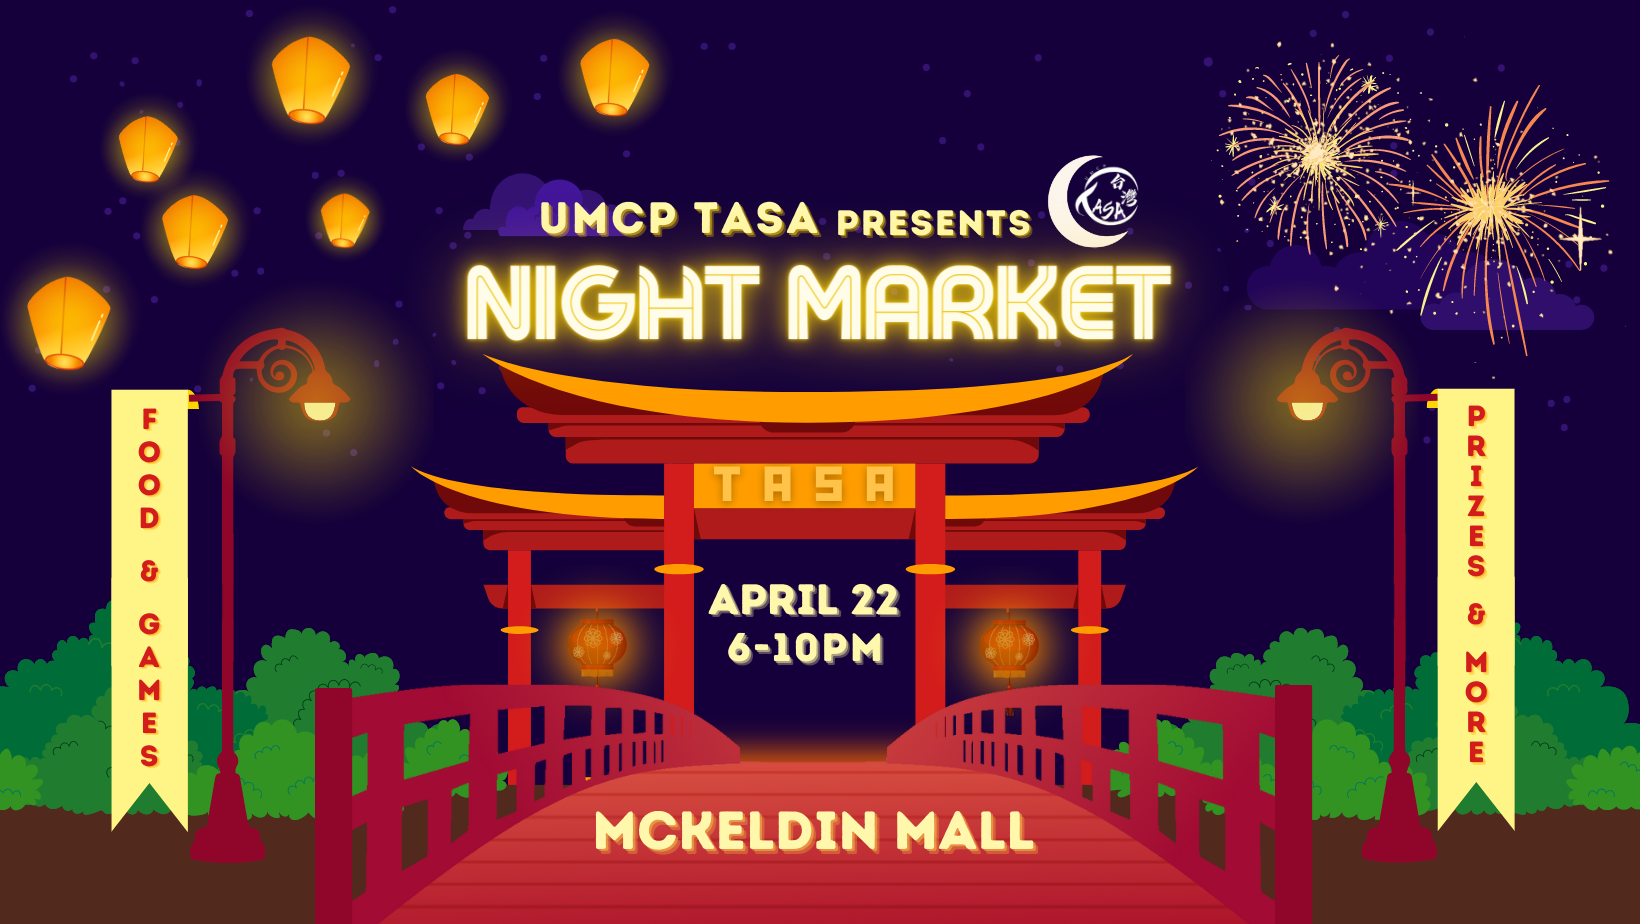 Night Market 2023